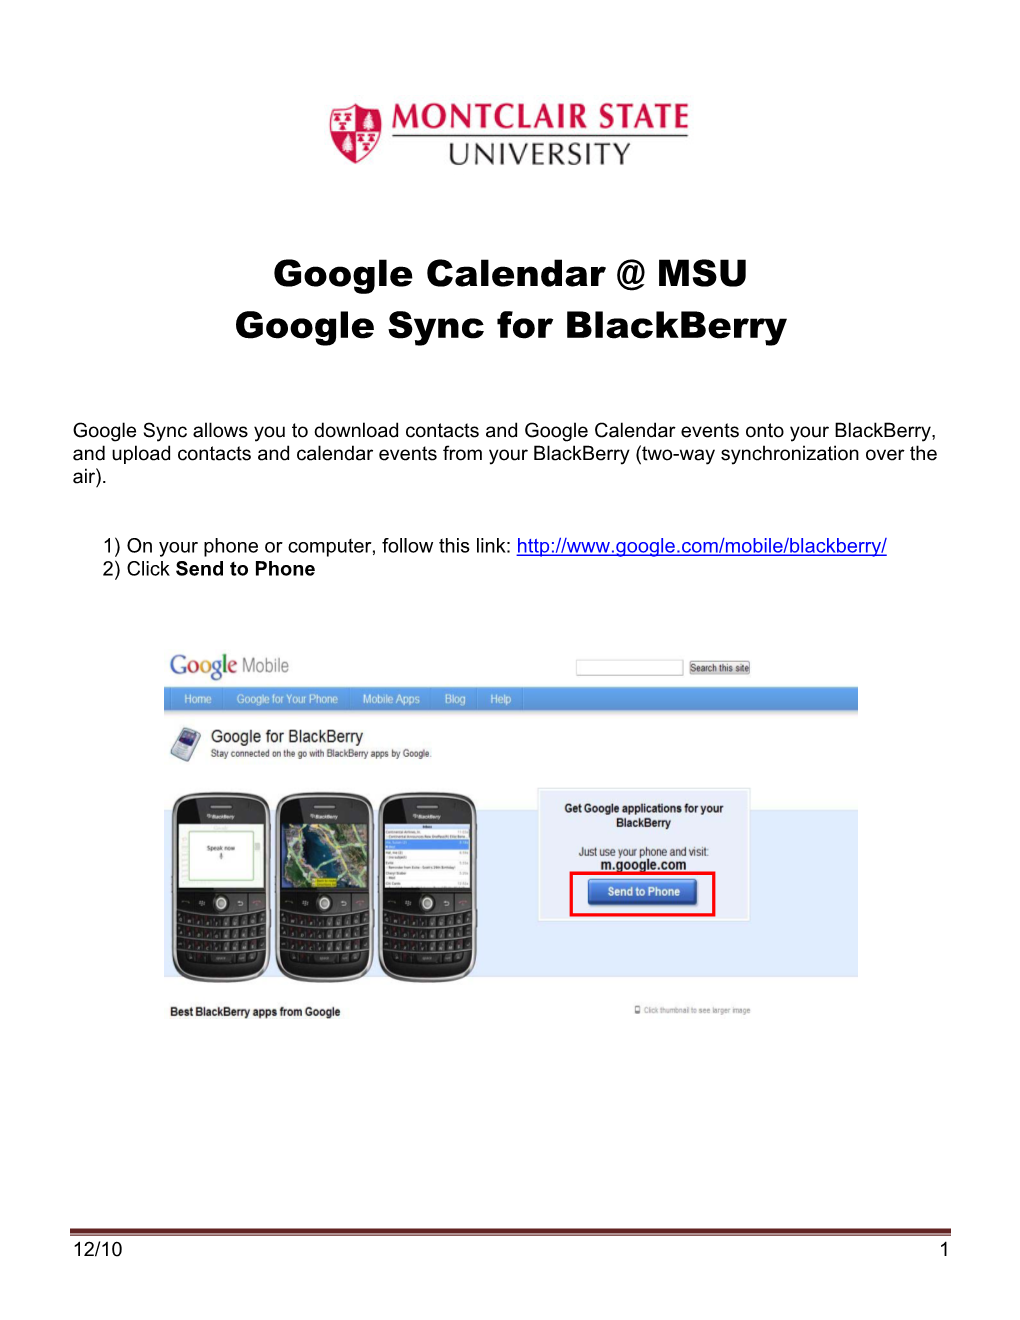 Google Calendar @ MSU Google Sync for Blackberry